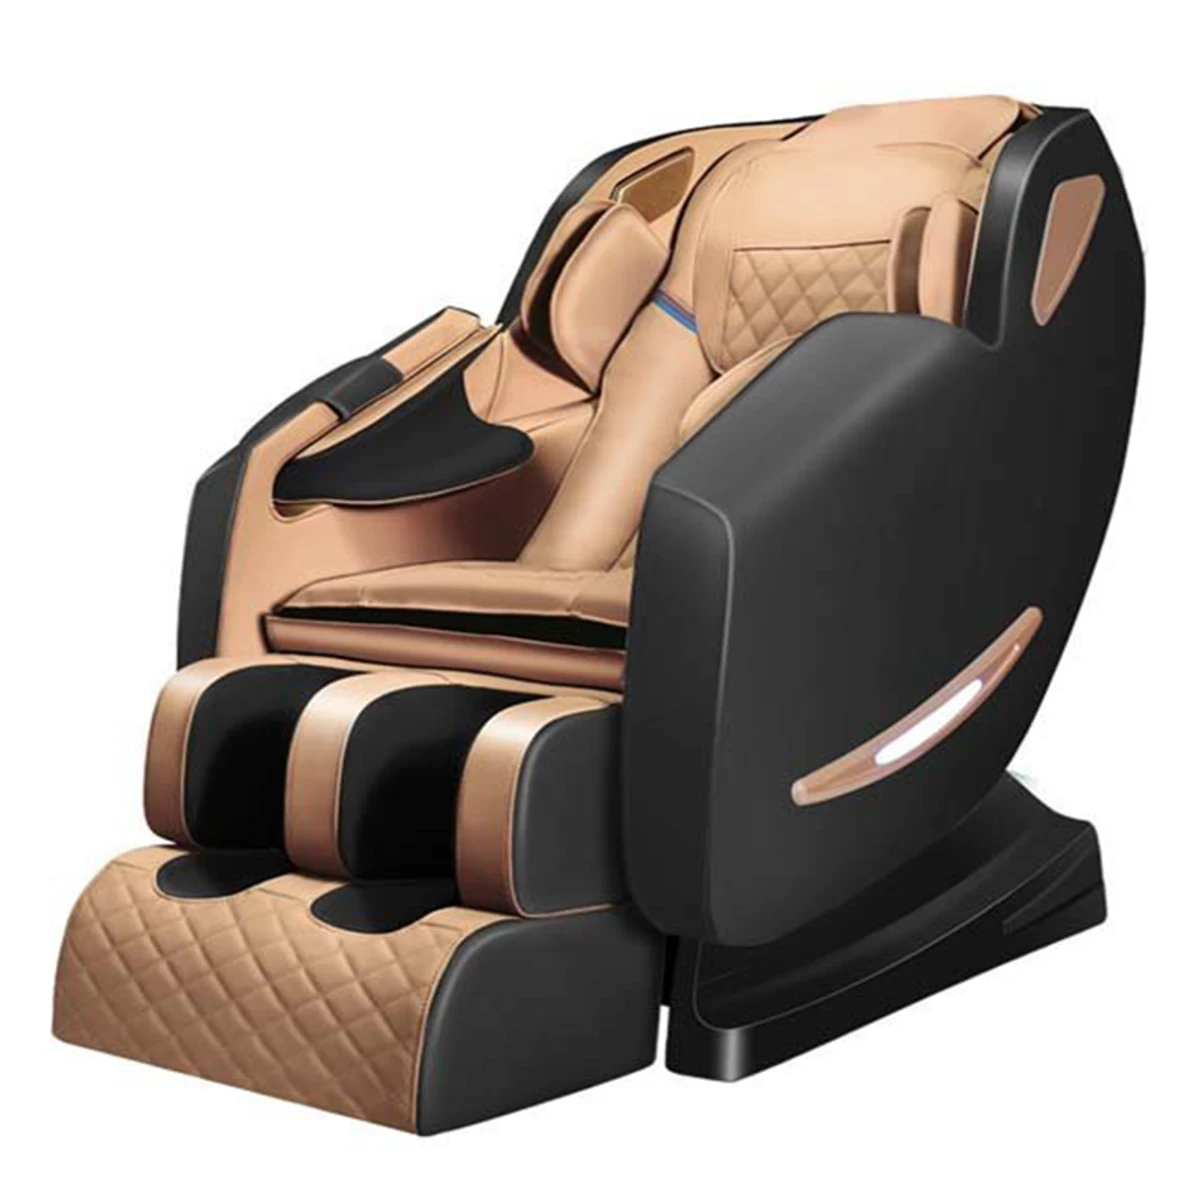 SL-555 Luxurious Body Massage Chair